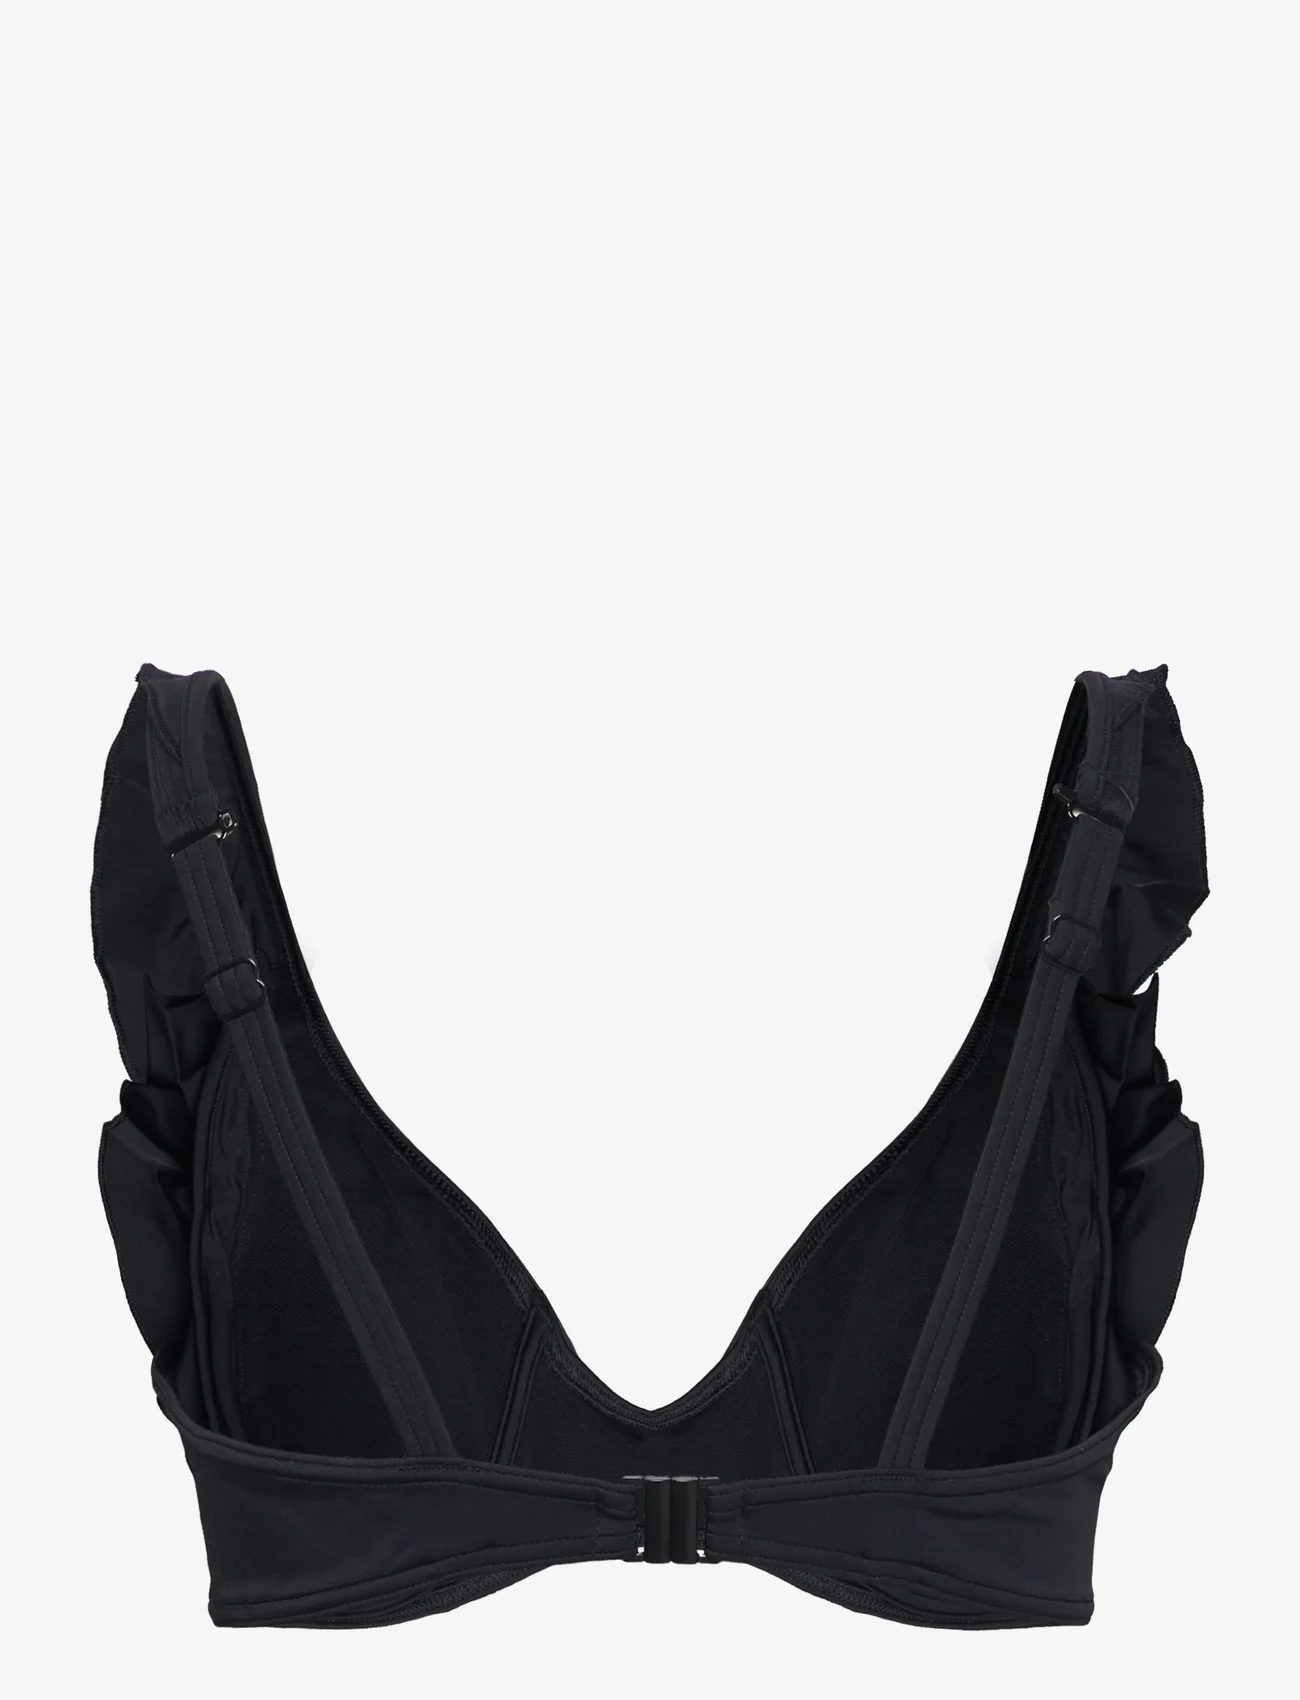 Freya - JEWEL COVE UW HIGH APEX BIKINI TOP 30 D - bikini augšiņa ar lencēm - plain black - 1